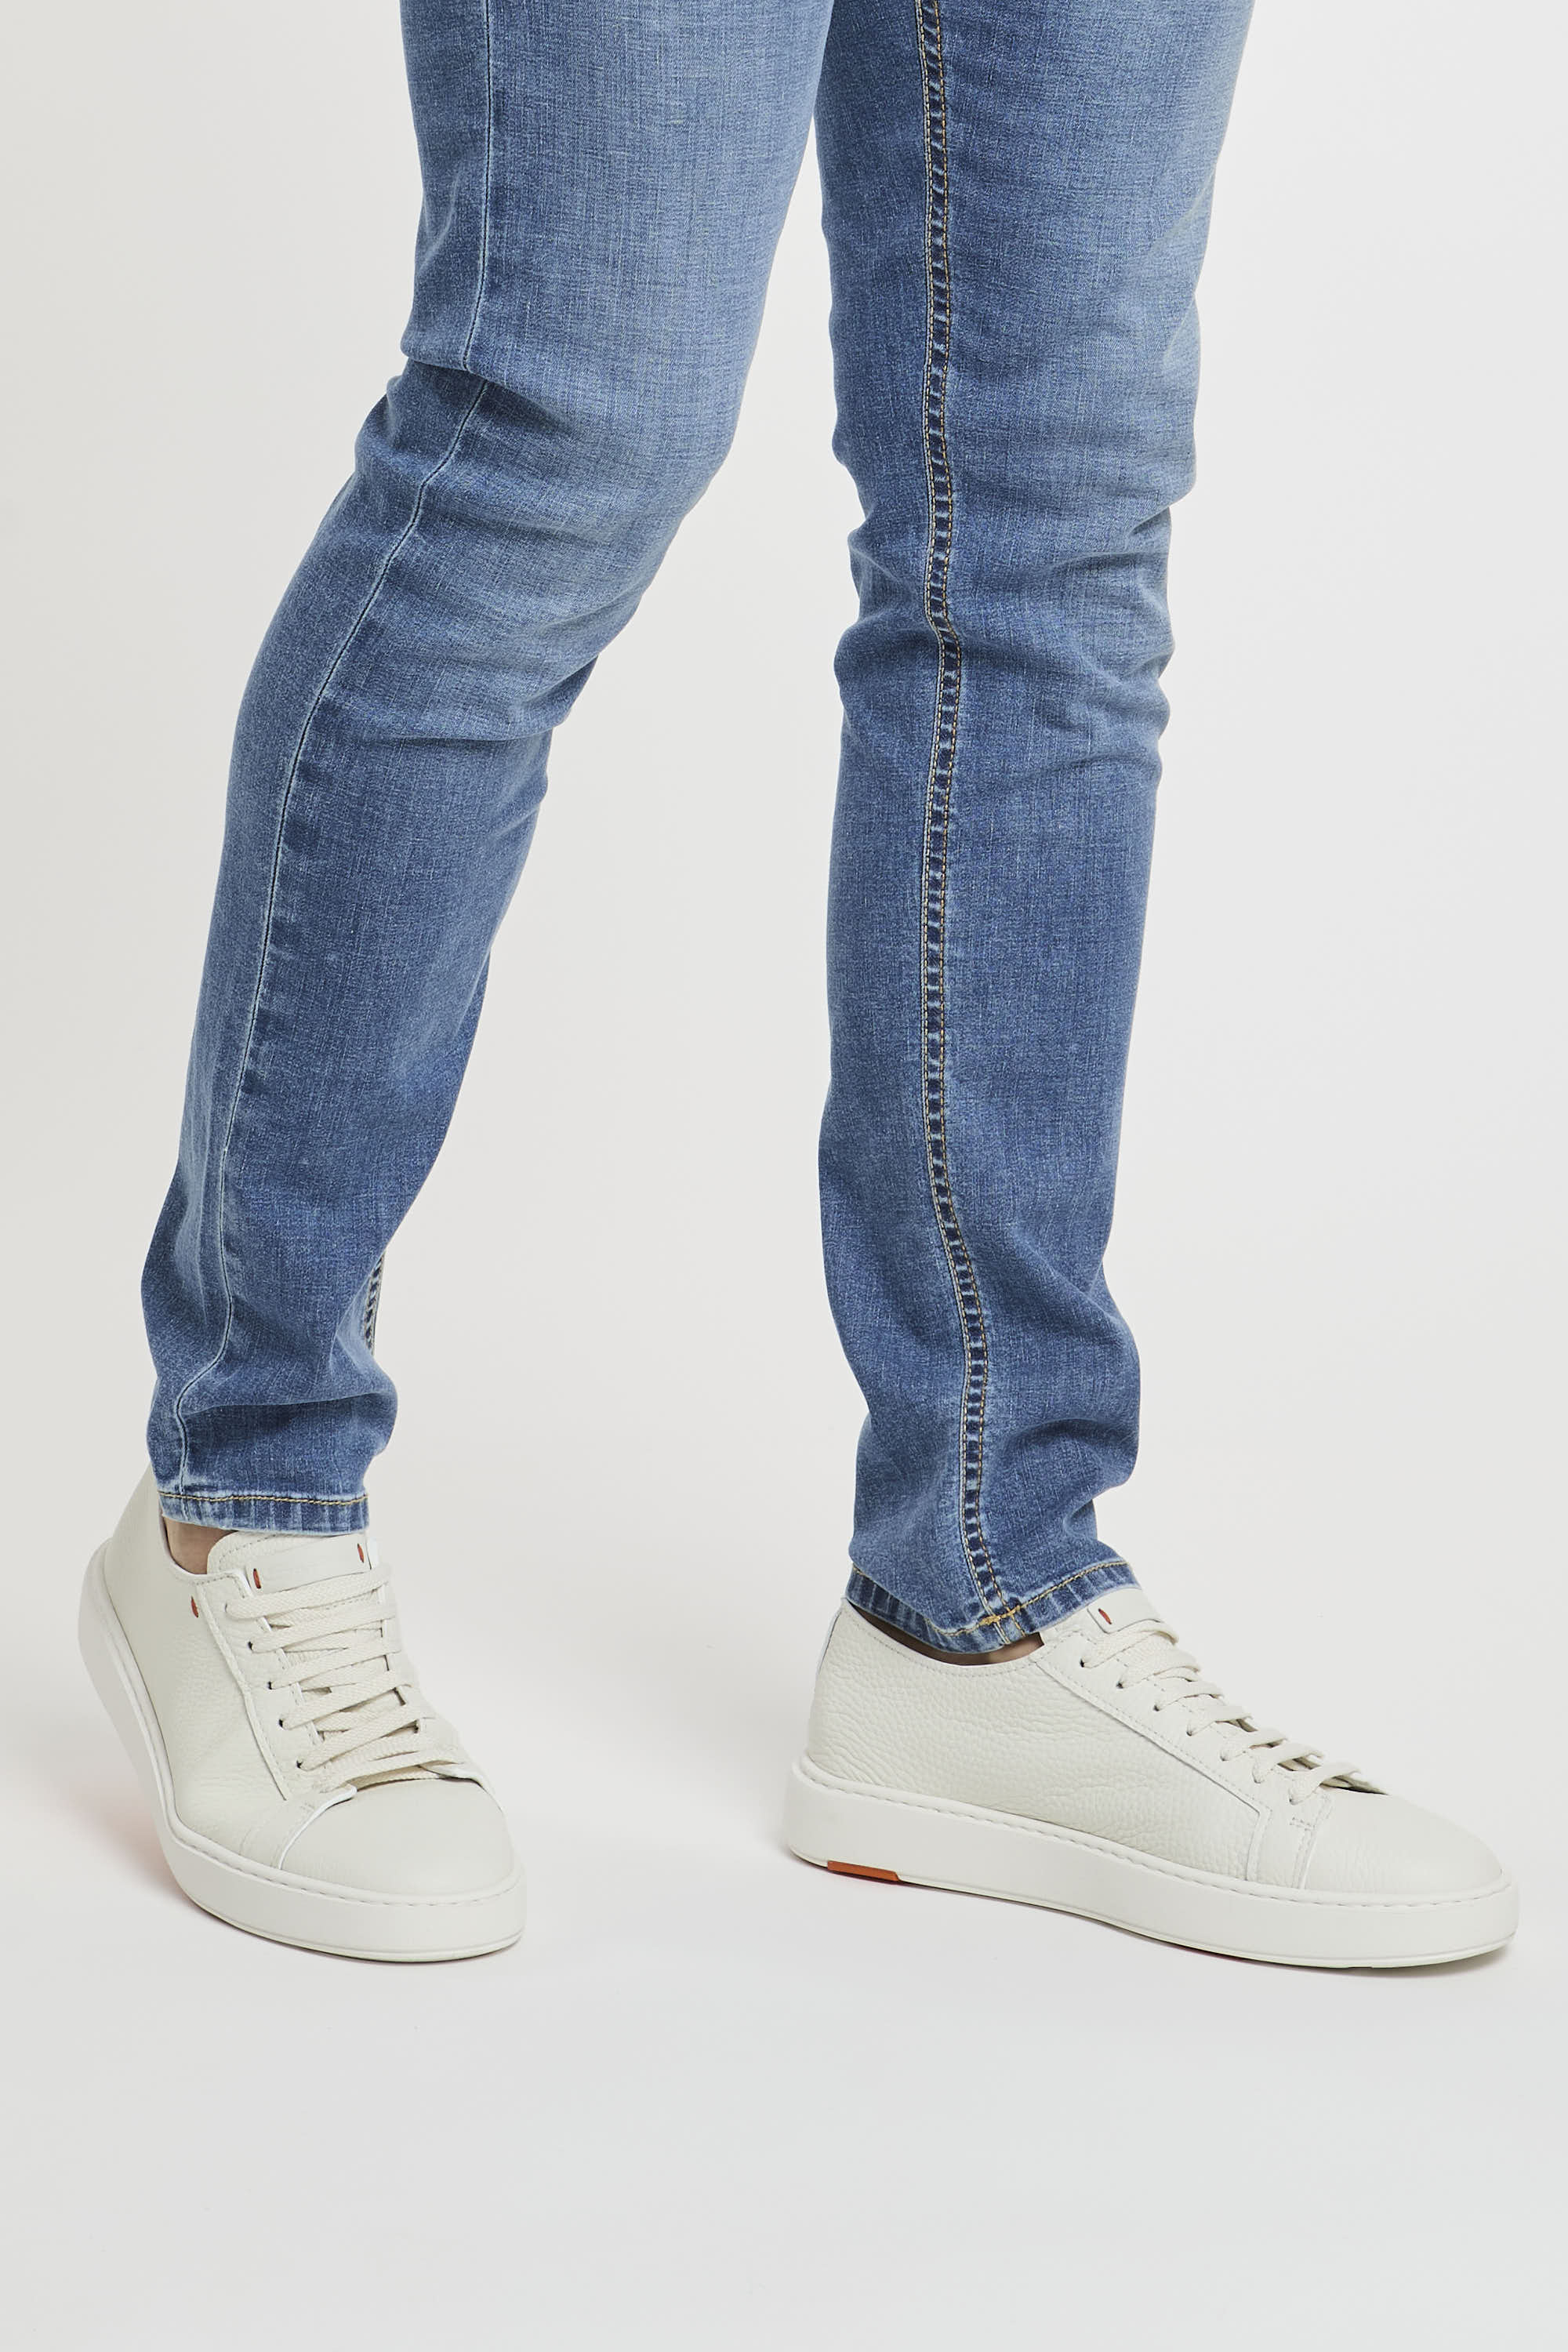 Handpicked Jeans Parma in Cotton Denim-7